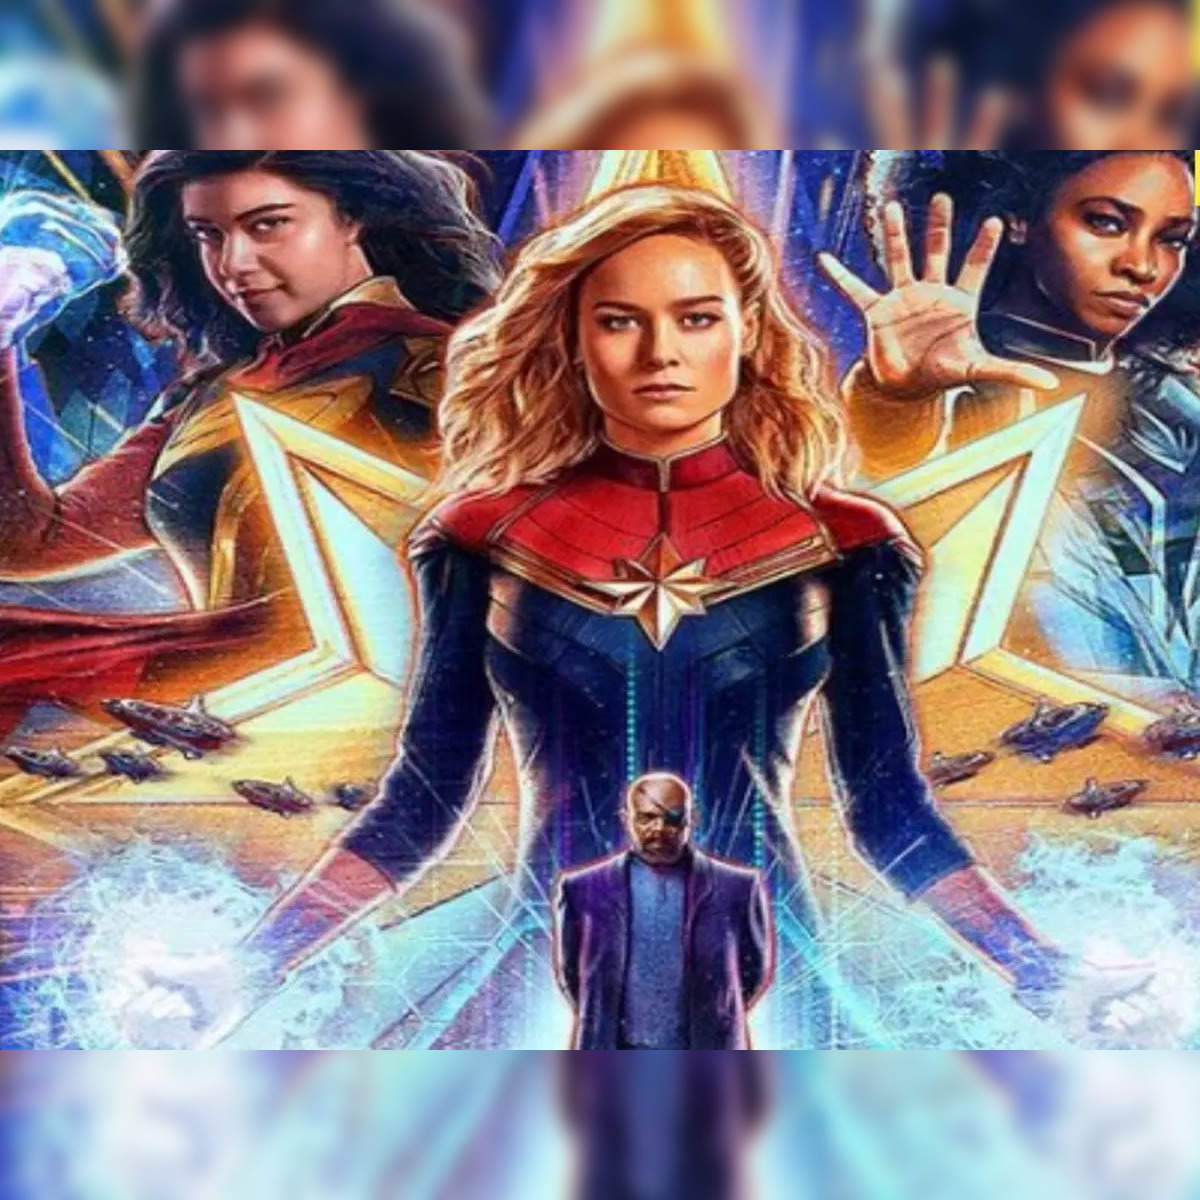 Captain Marvel on X: Here's the new international poster for